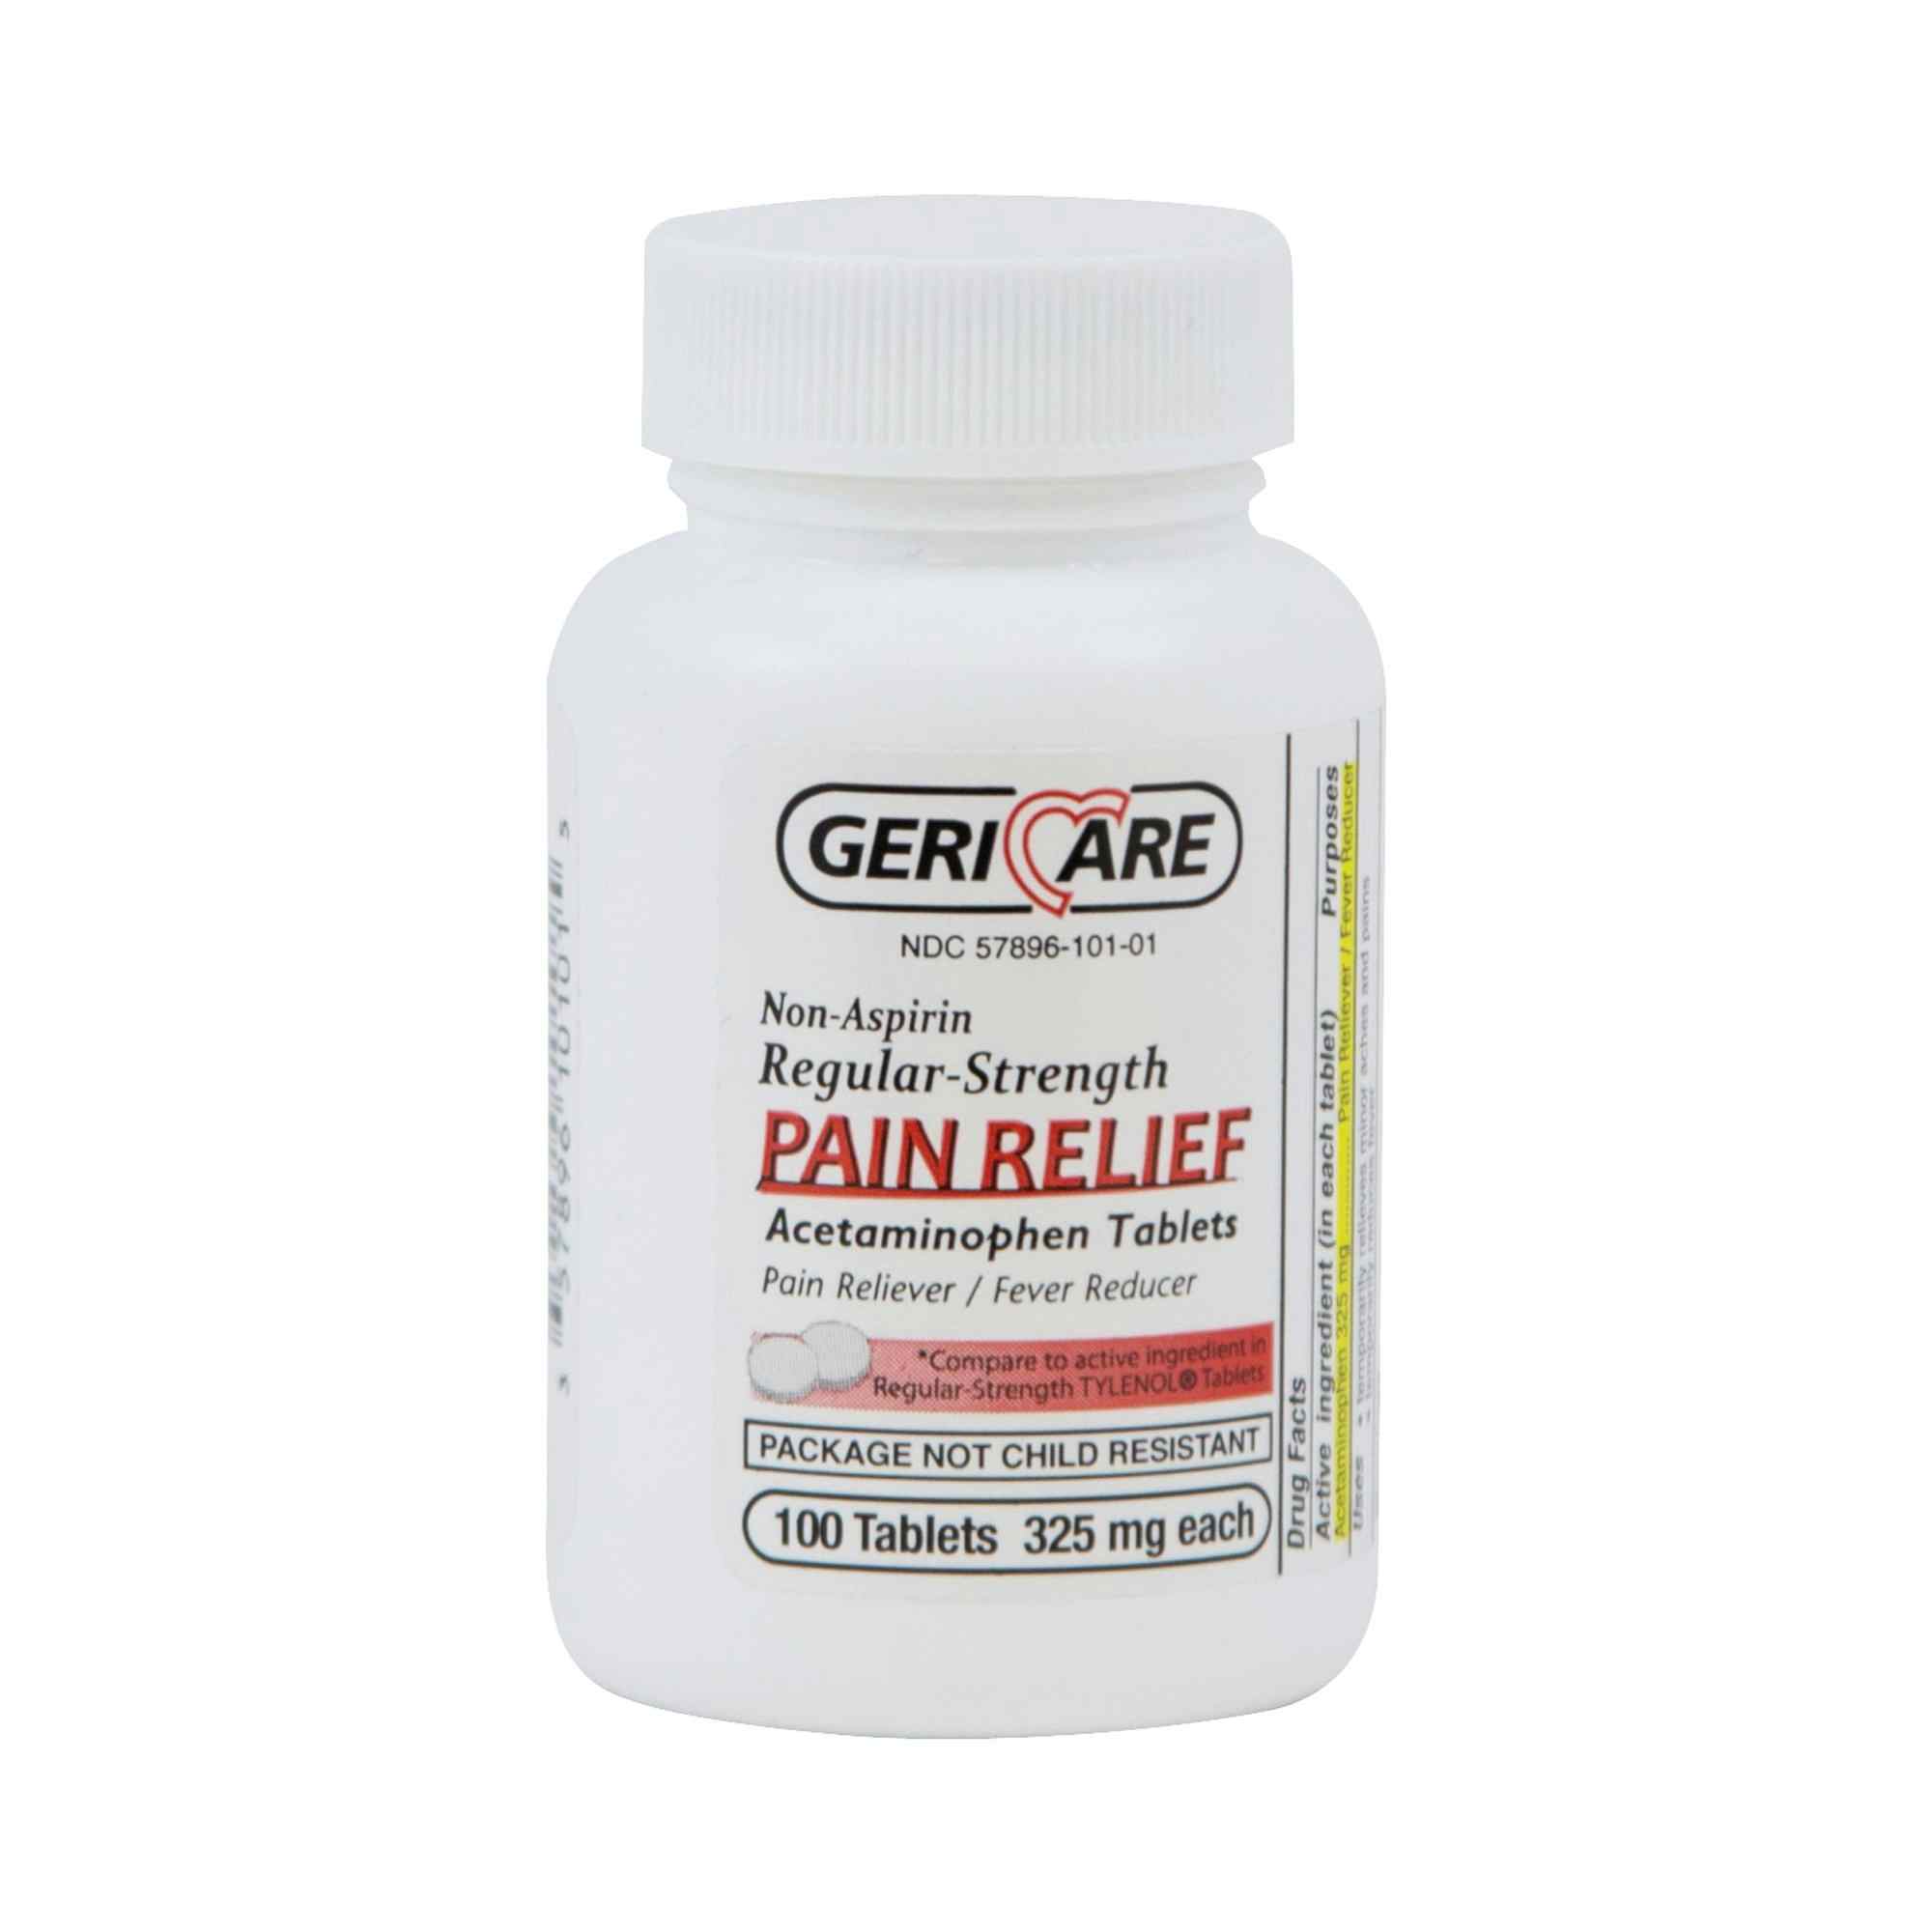 Geri-Care Non-Aspirin Regular-Strength Pain Relief Acetaminophen Tablets, 325 mg